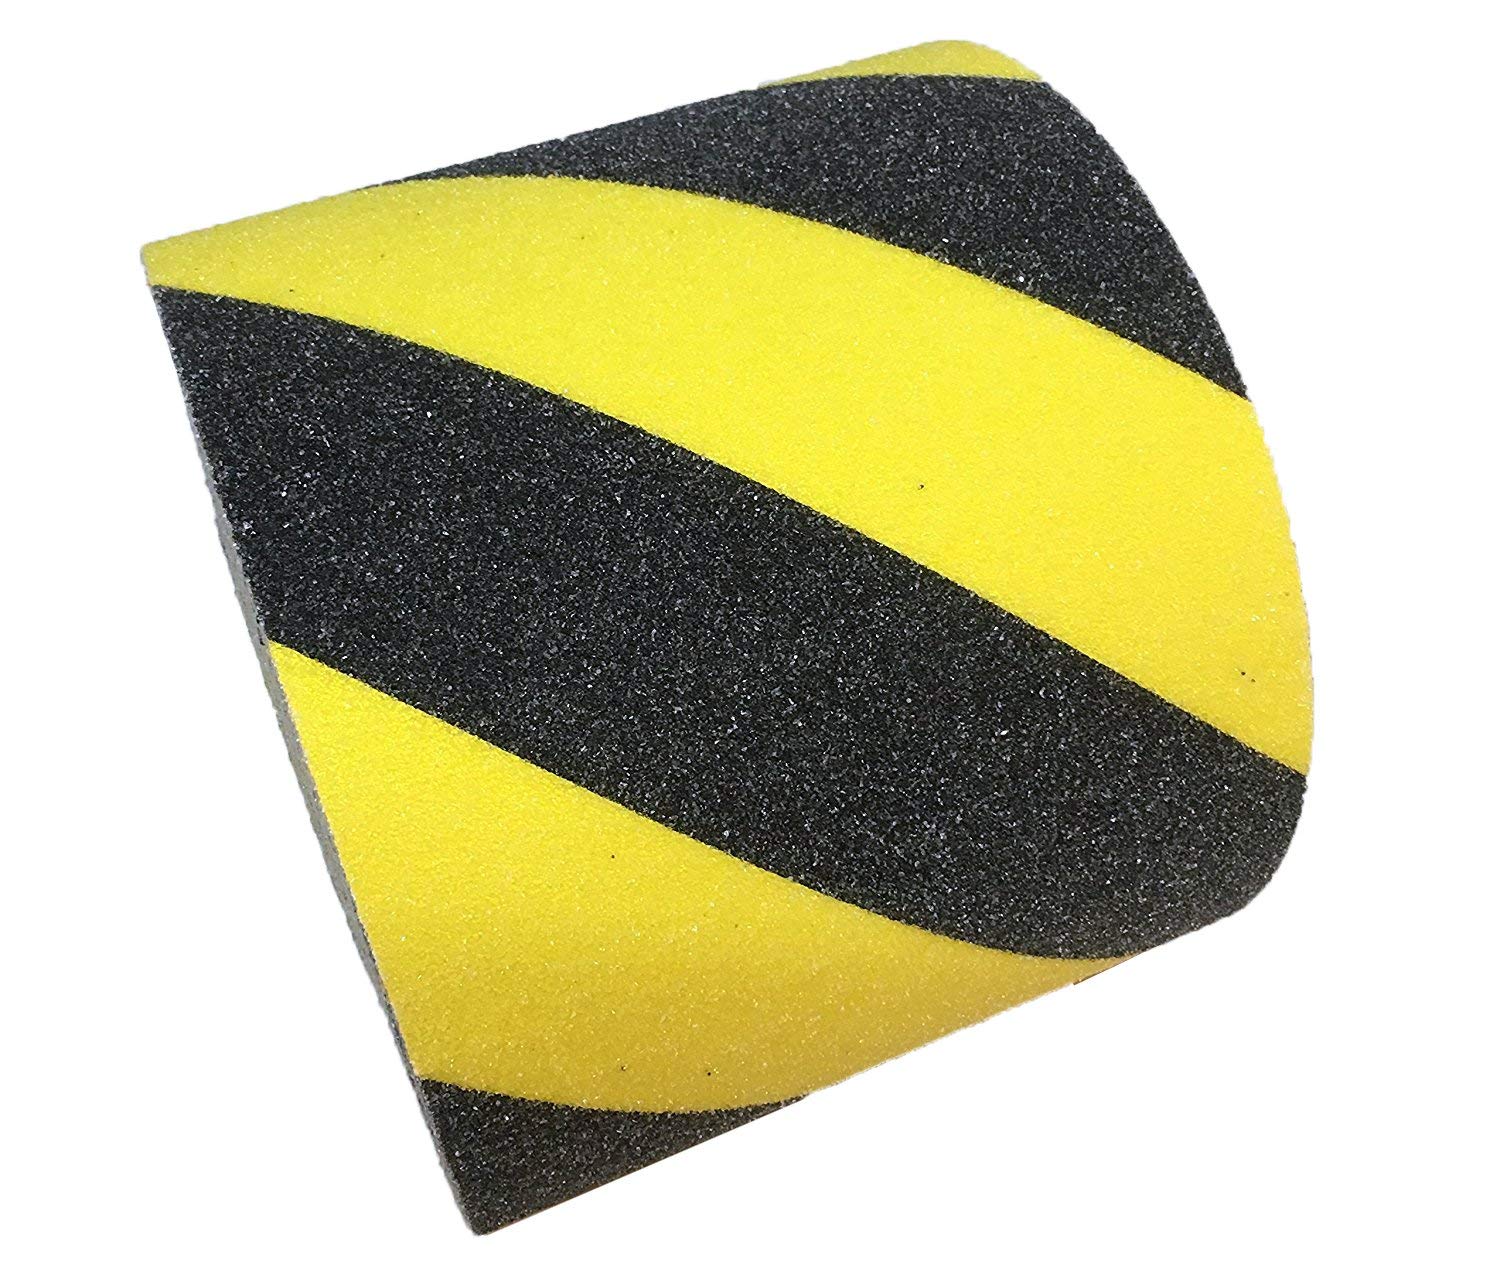 Cushion-Grip Non-Abrasive Anti-Slip Tape - Safety Direct America